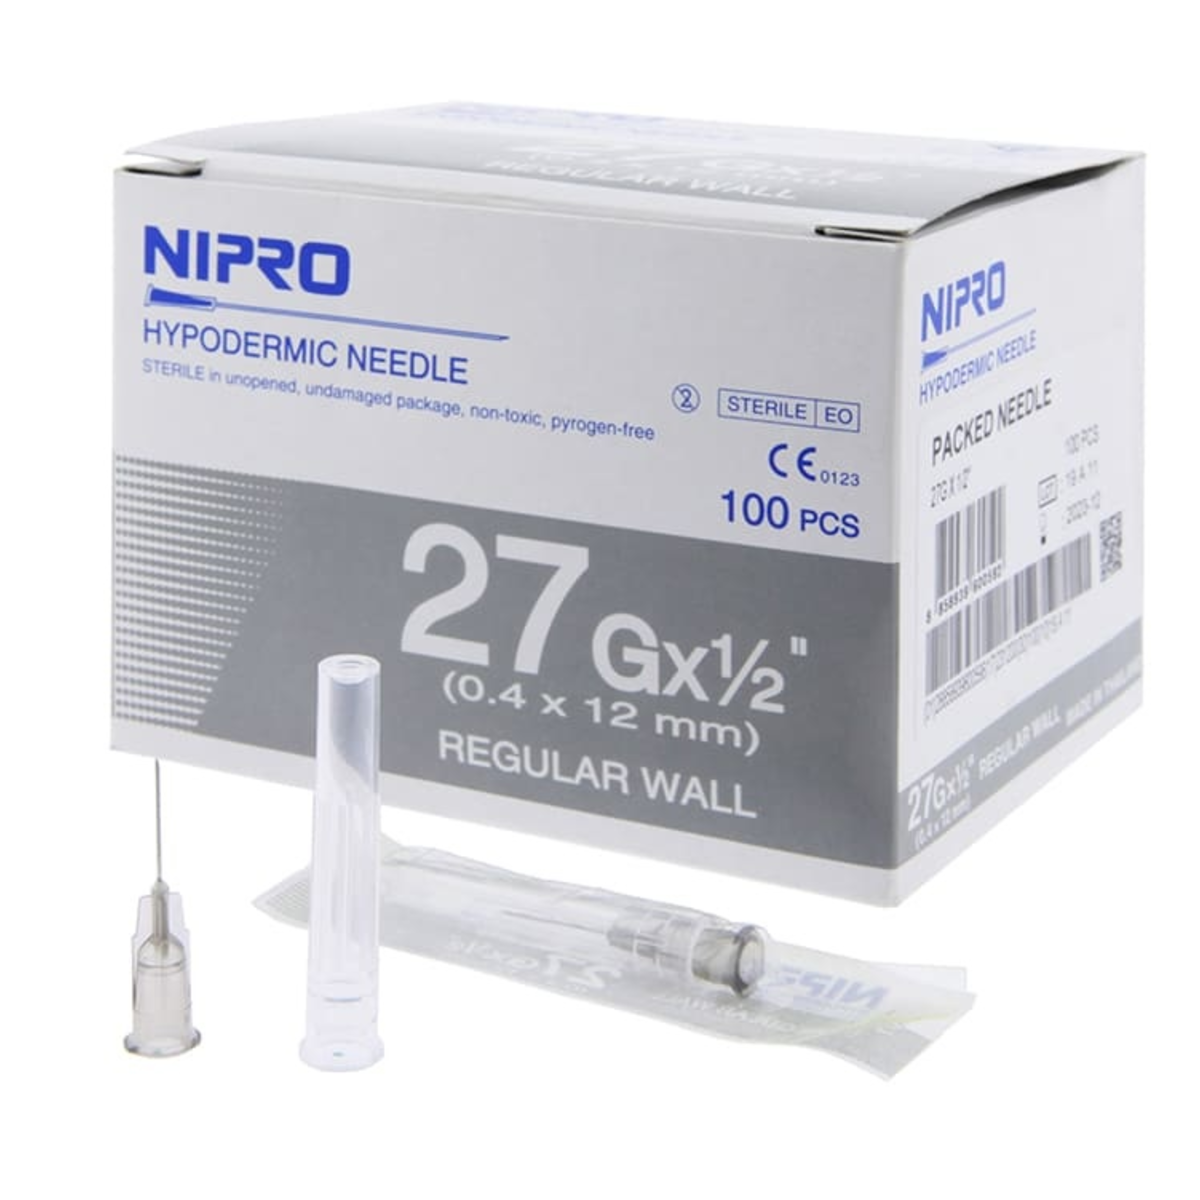 NIPRO เข็มฉีดยา ขนาด 27G x 1/2 นิ้ว (กล่อง)